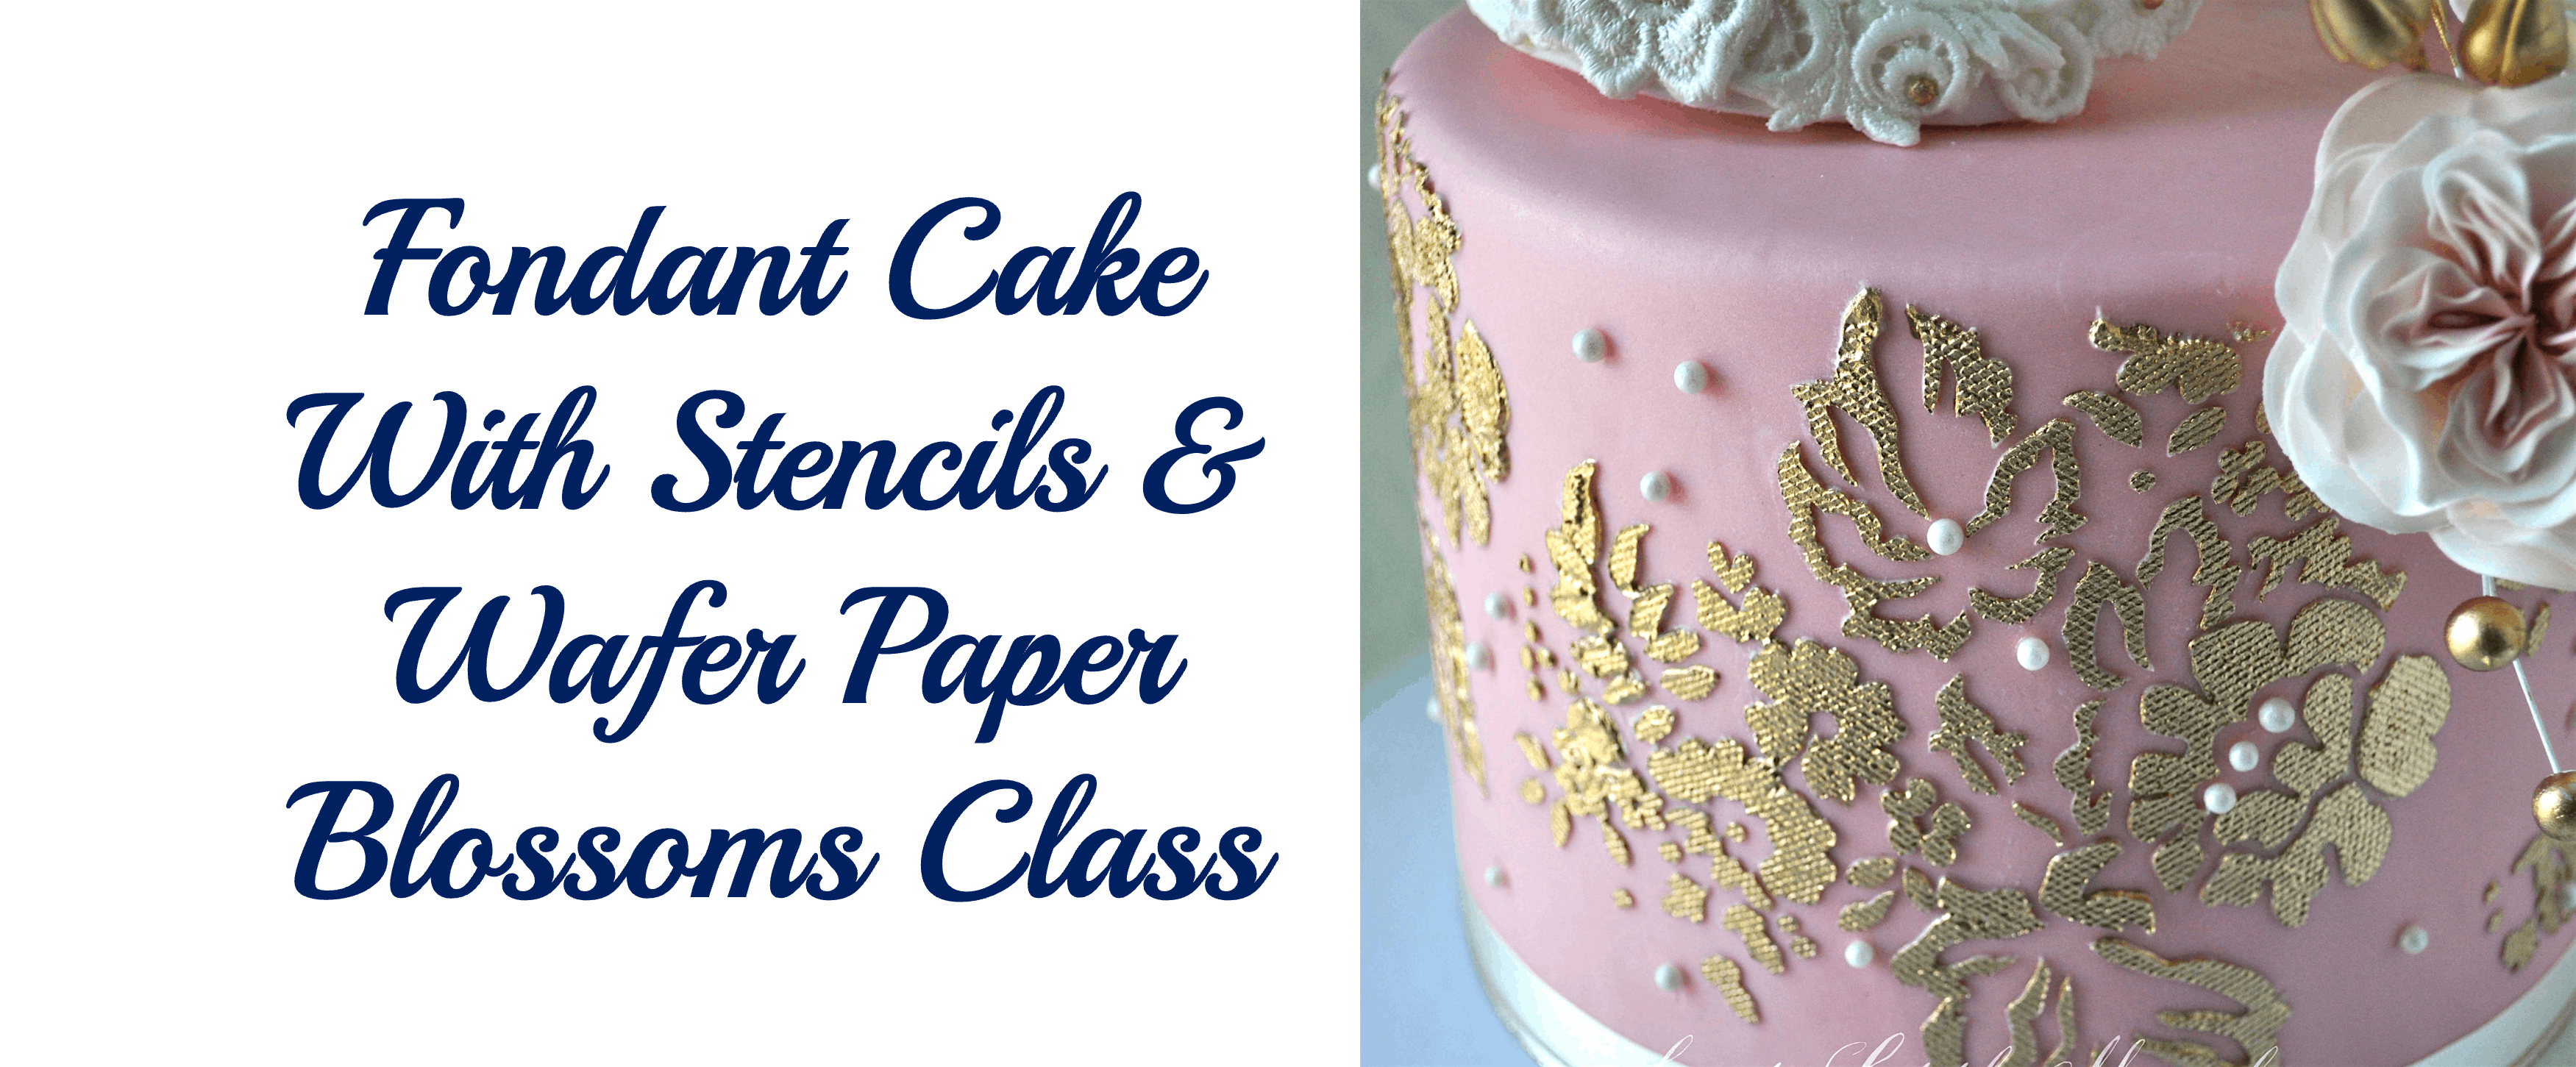 Fondant Cake Class w/Stencil & Wafer Paper Blossoms